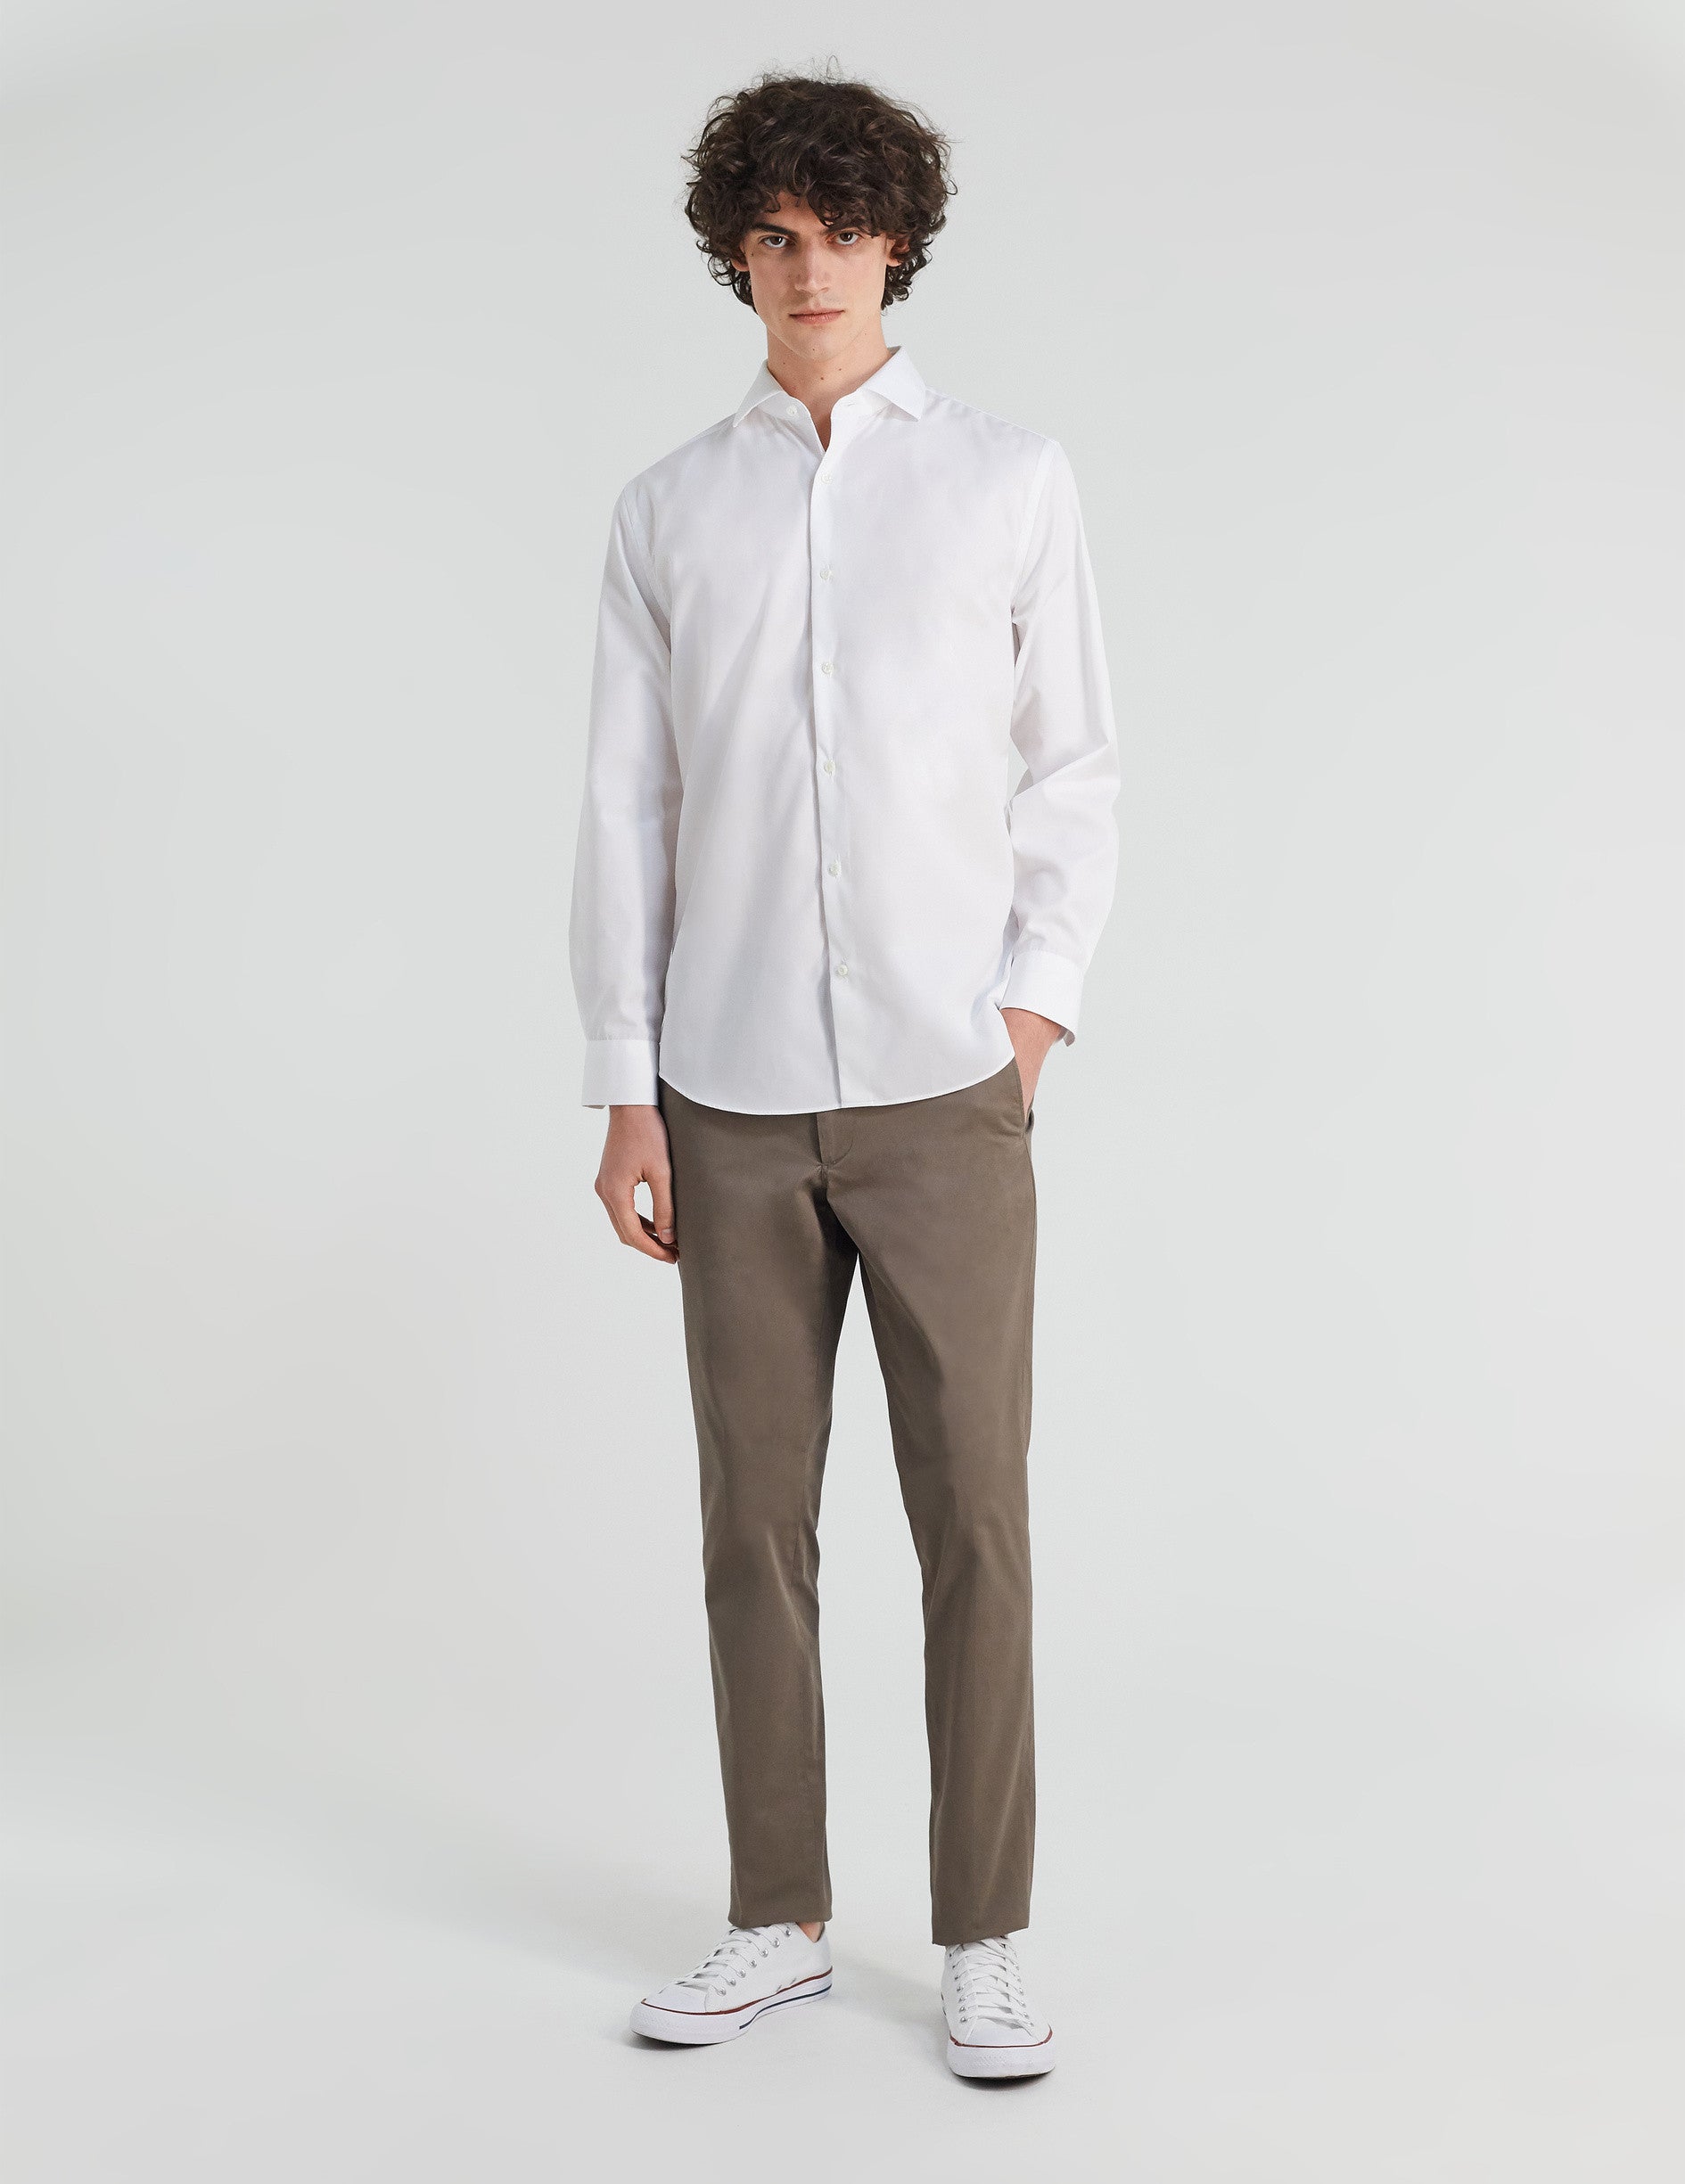 Classic white wrinkle-free shirt - Poplin - Italian Collar